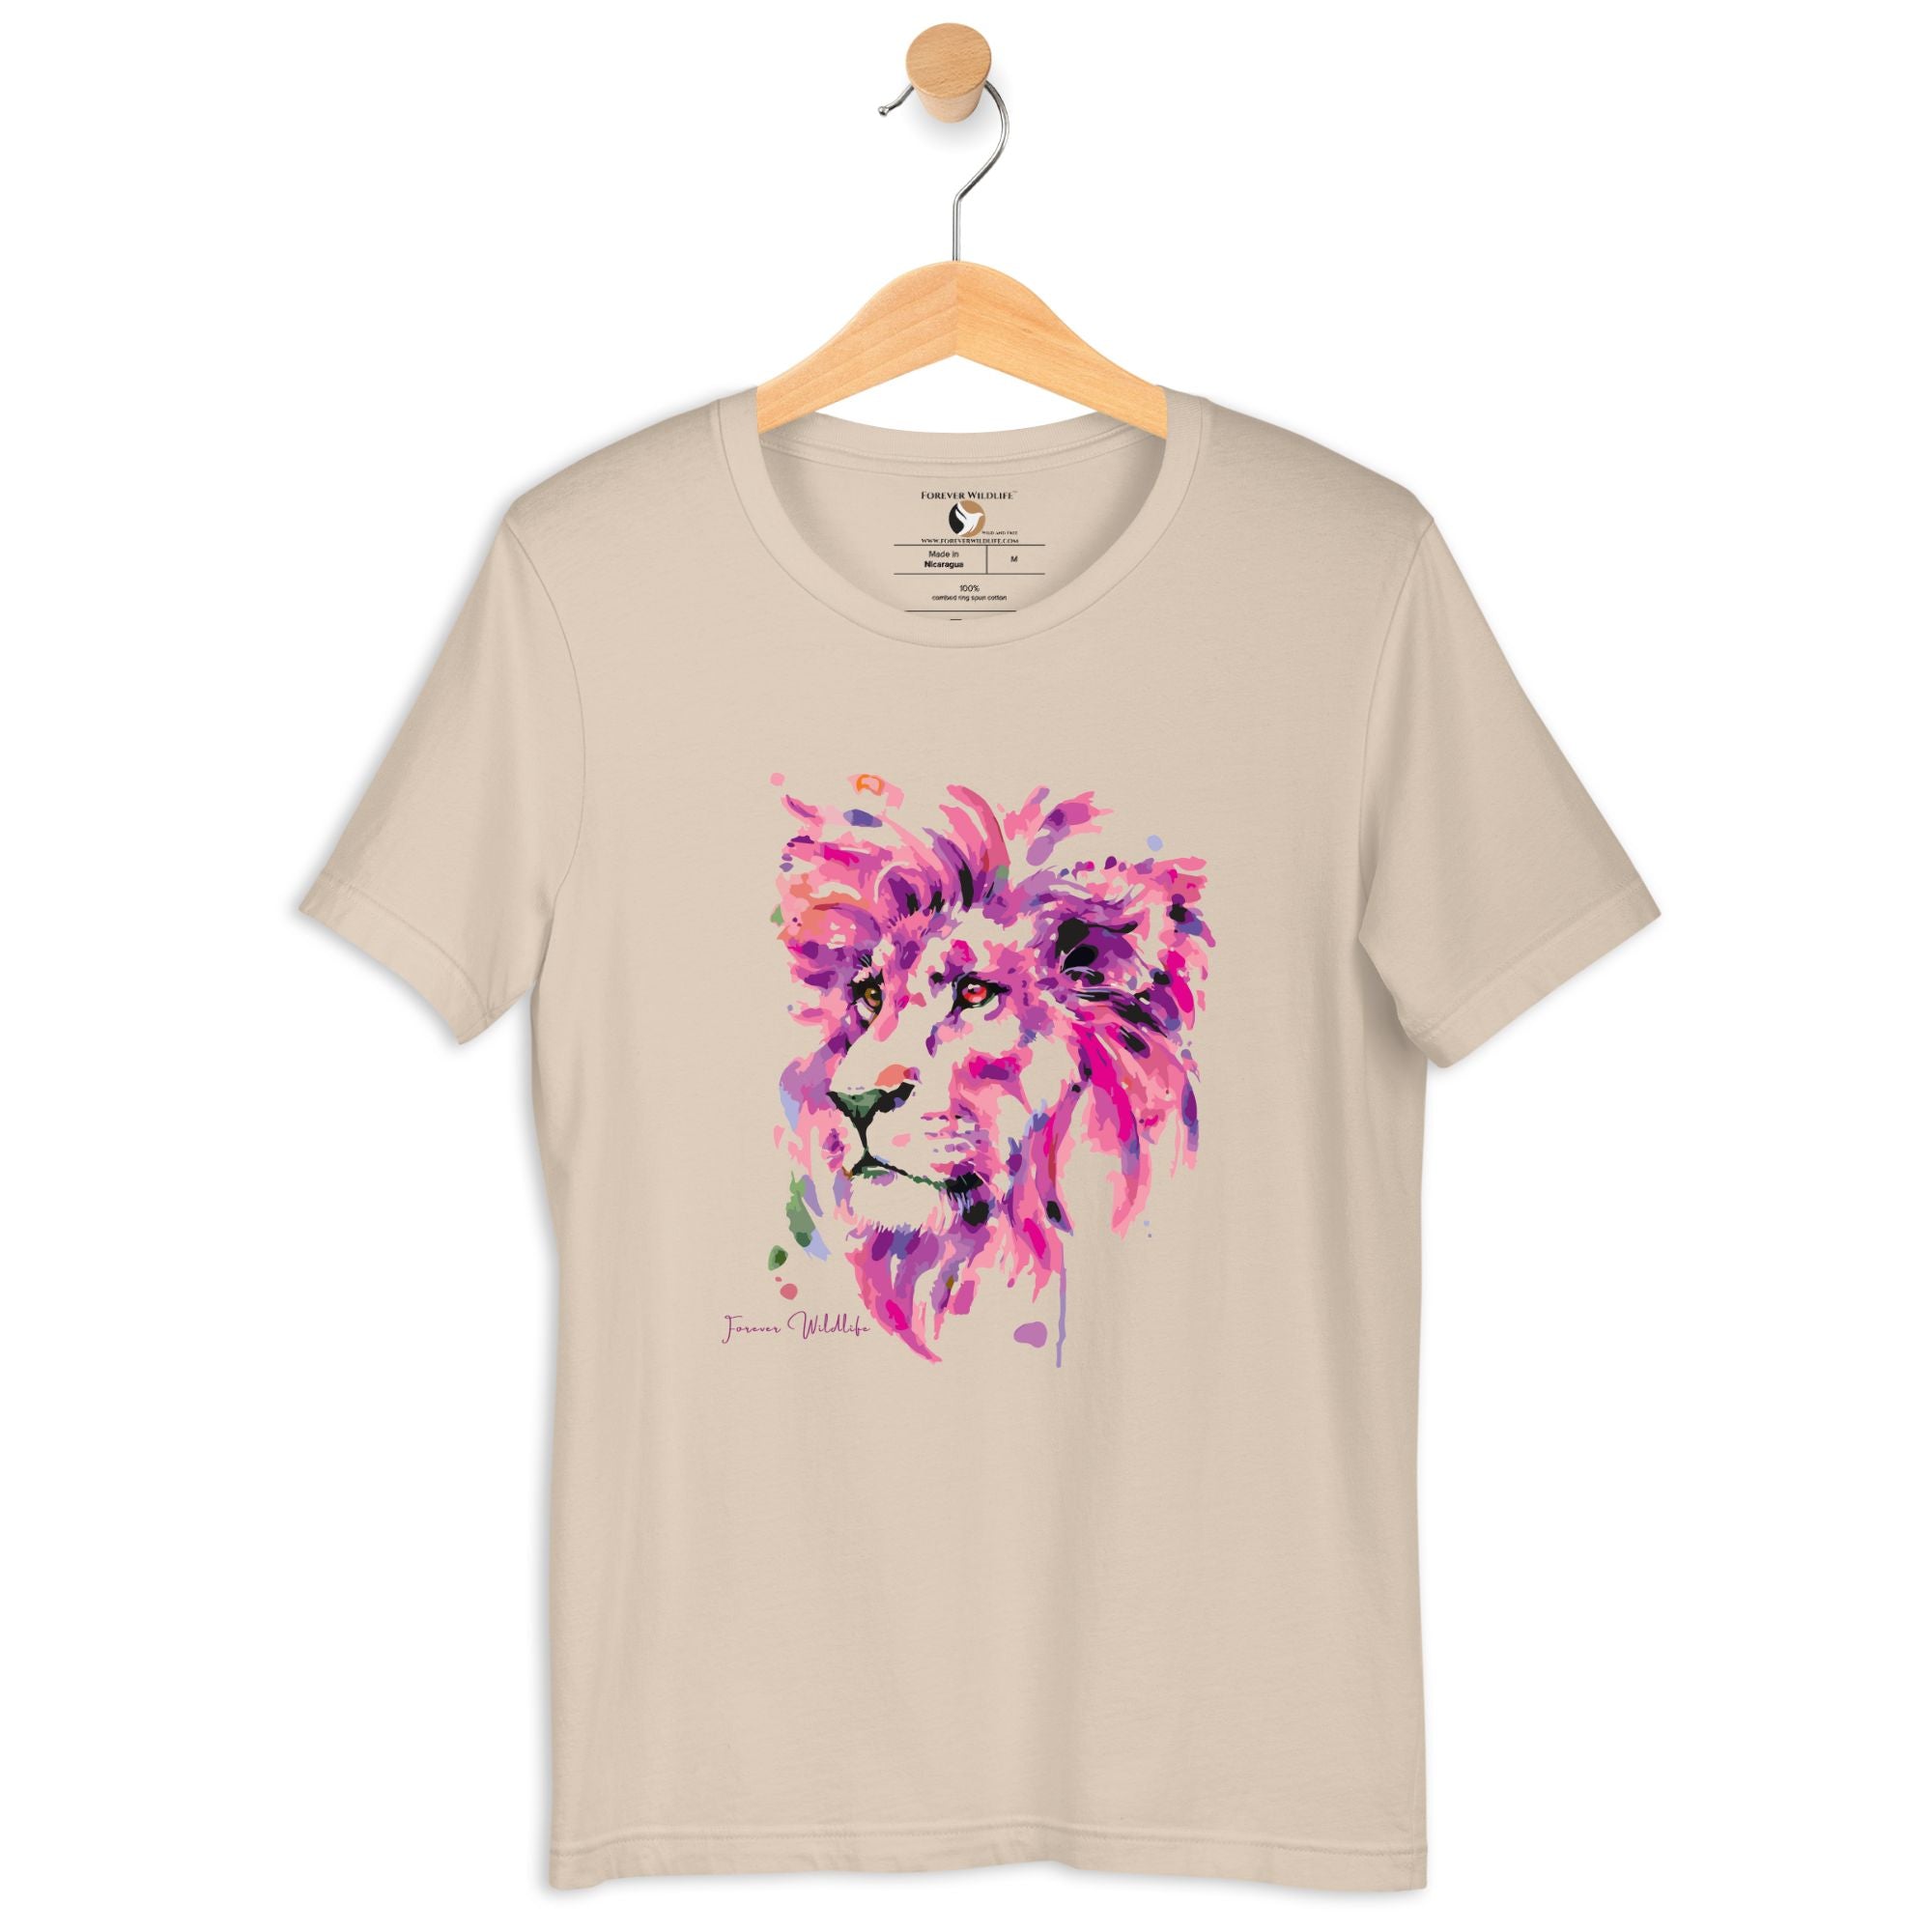 Lion T-Shirt in Soft Cream – Premium Wildlife T-Shirt Design, Wildlife Clothing & Apparel from Forever Wildlife